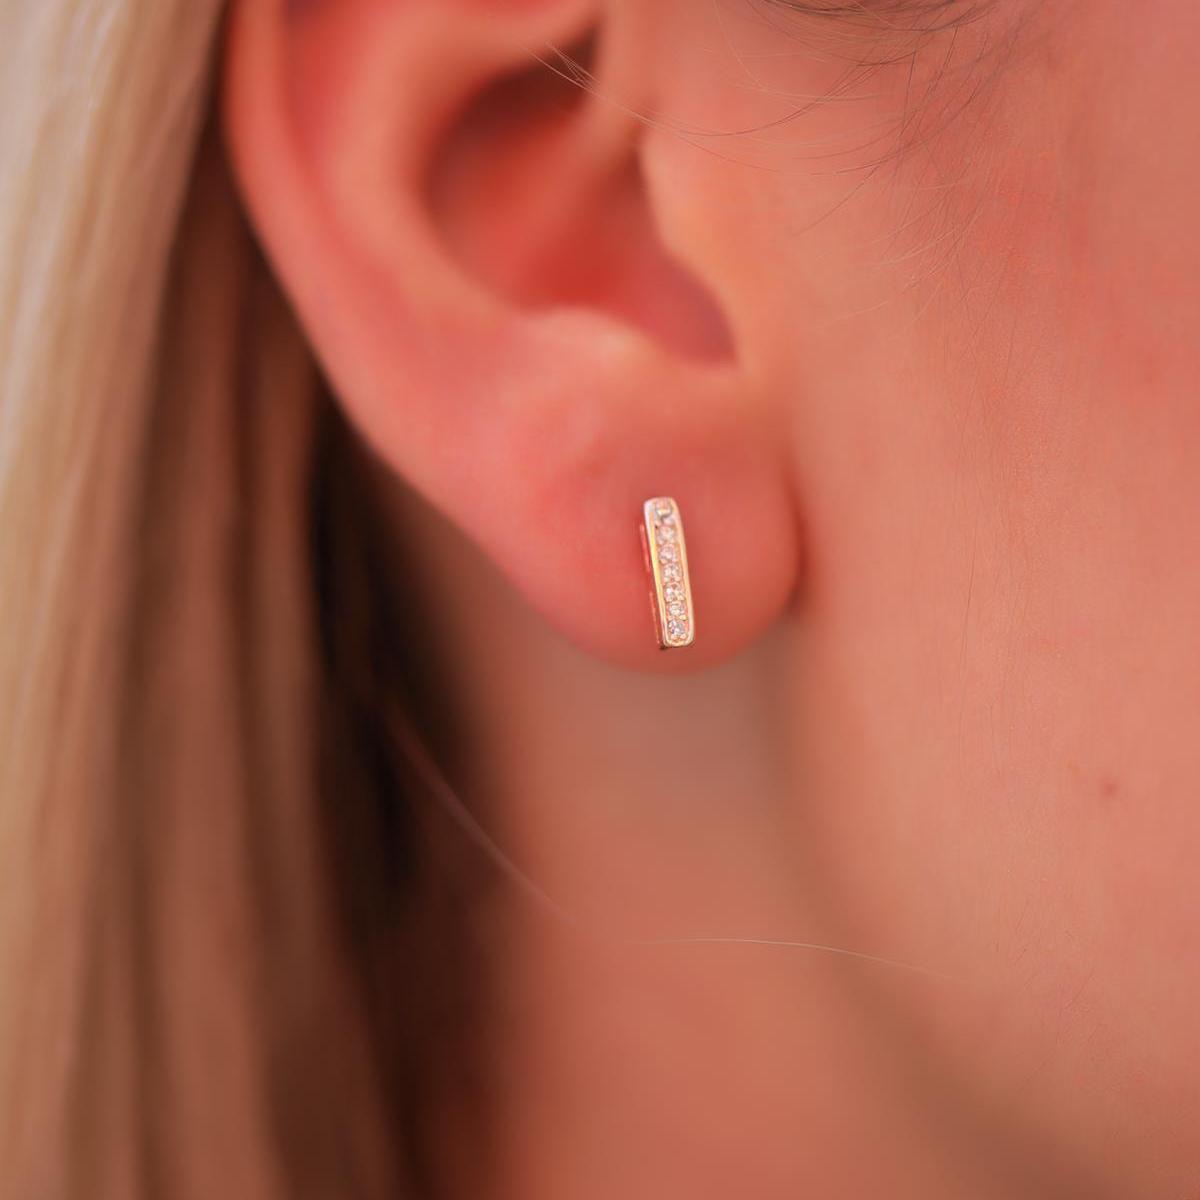 Small Diamond Earrings • Minimalist Diamond Earrings • Gift For Wife - Trending Silver Gifts